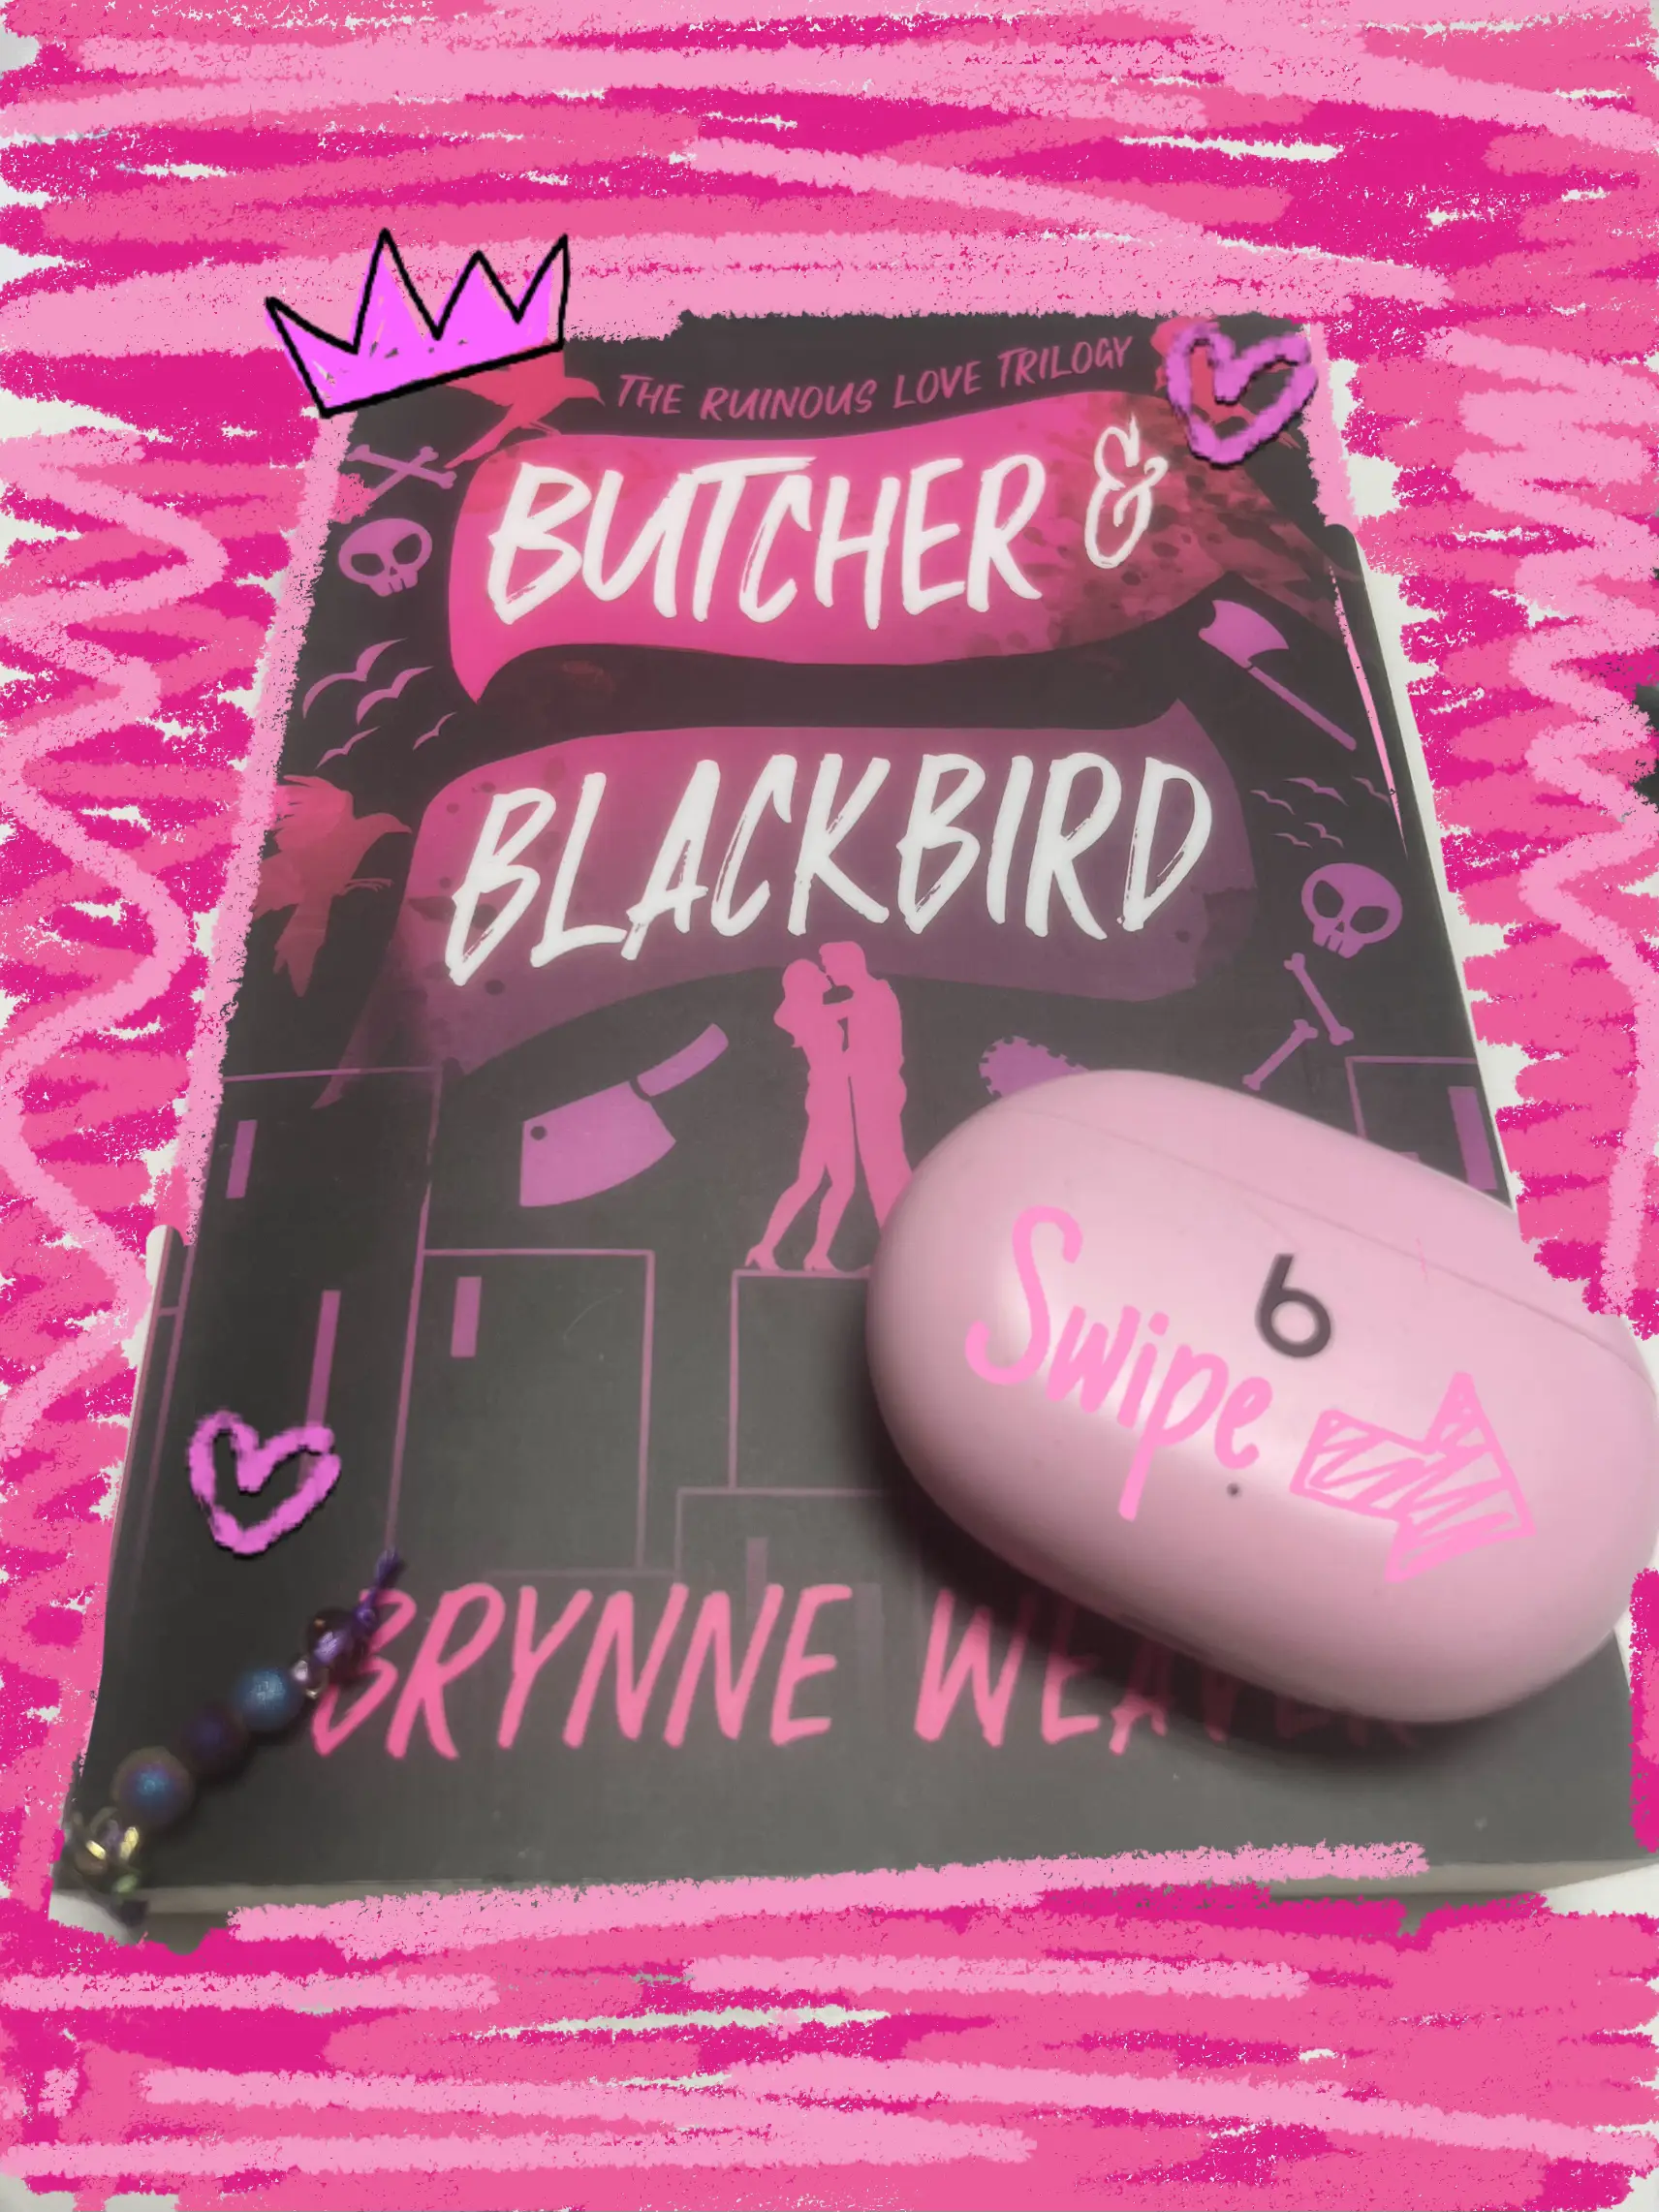 Review // Butcher & Blackbird by Brynne Weaver